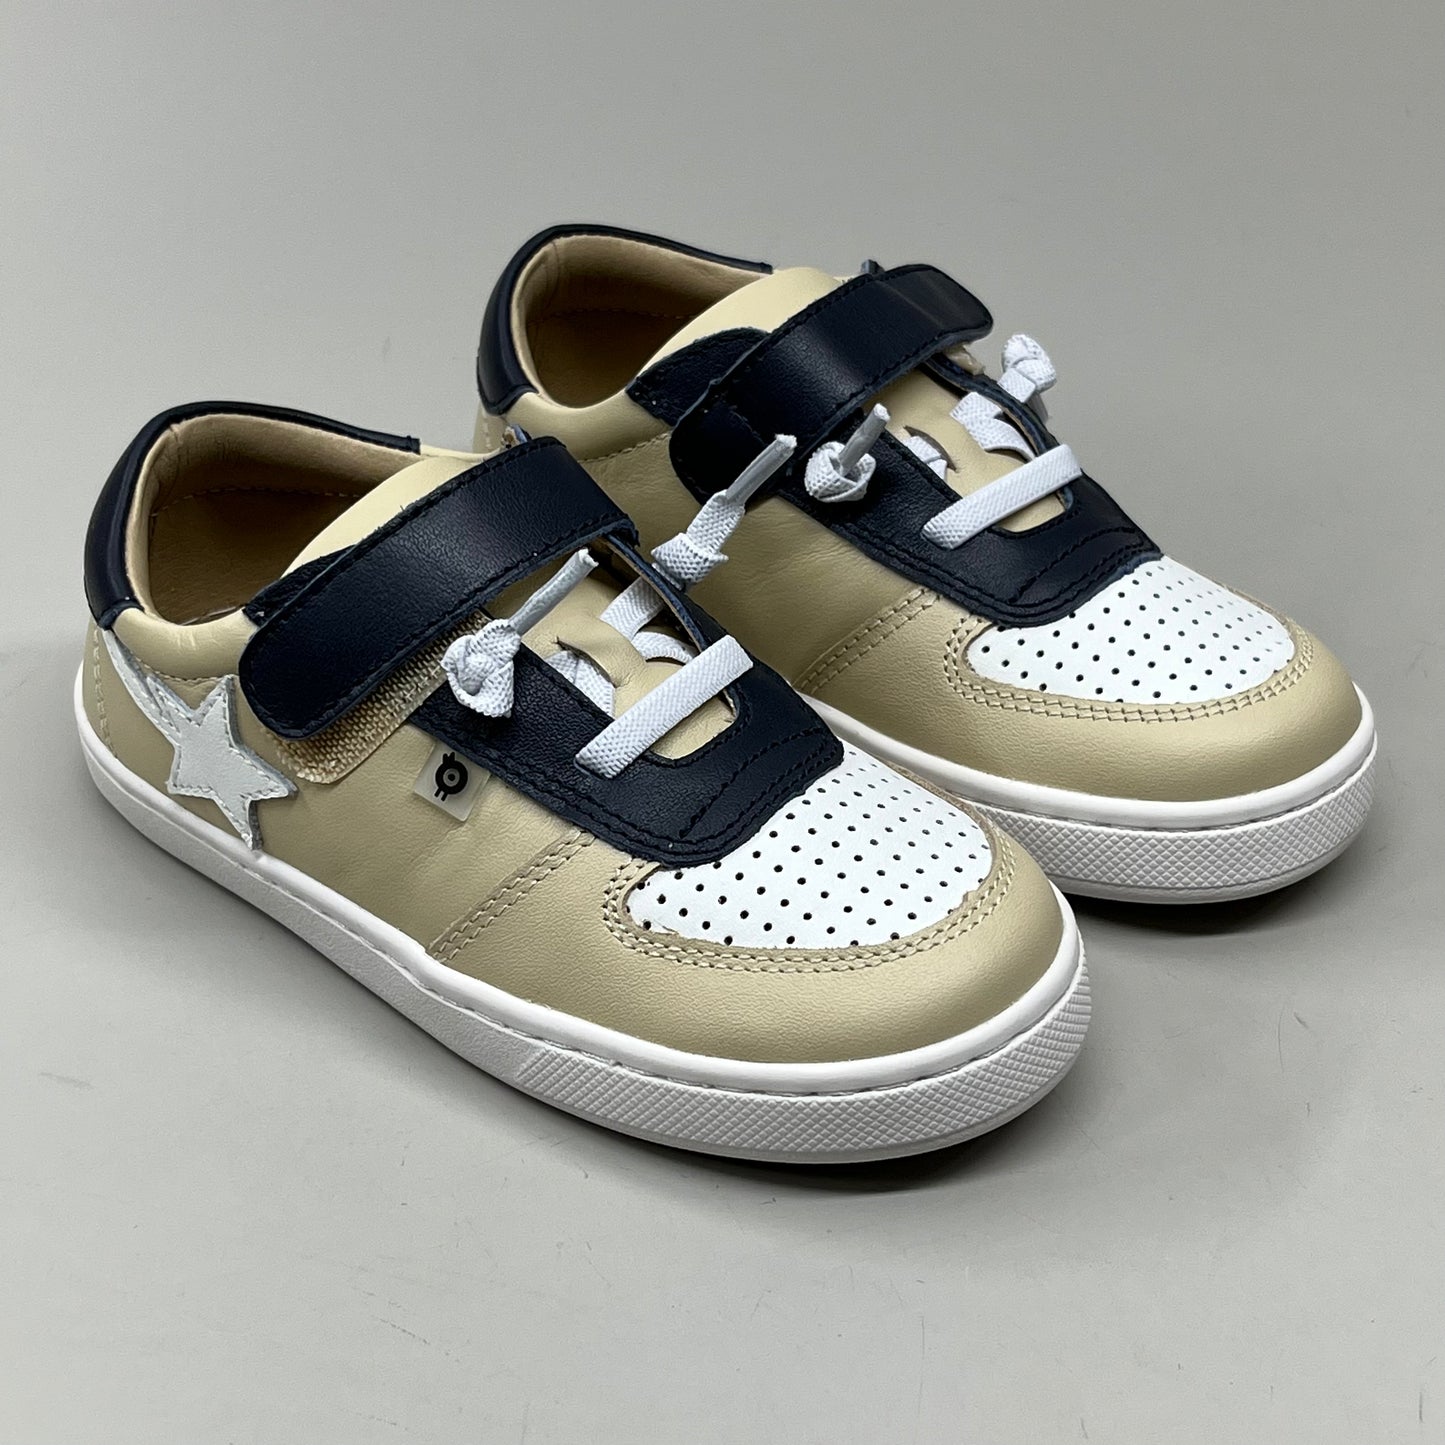 OLD SOLES Runsky Sneakers Leather Shoe Kid’s Sz 28 US 11 Cream/Navy/Snow #6135